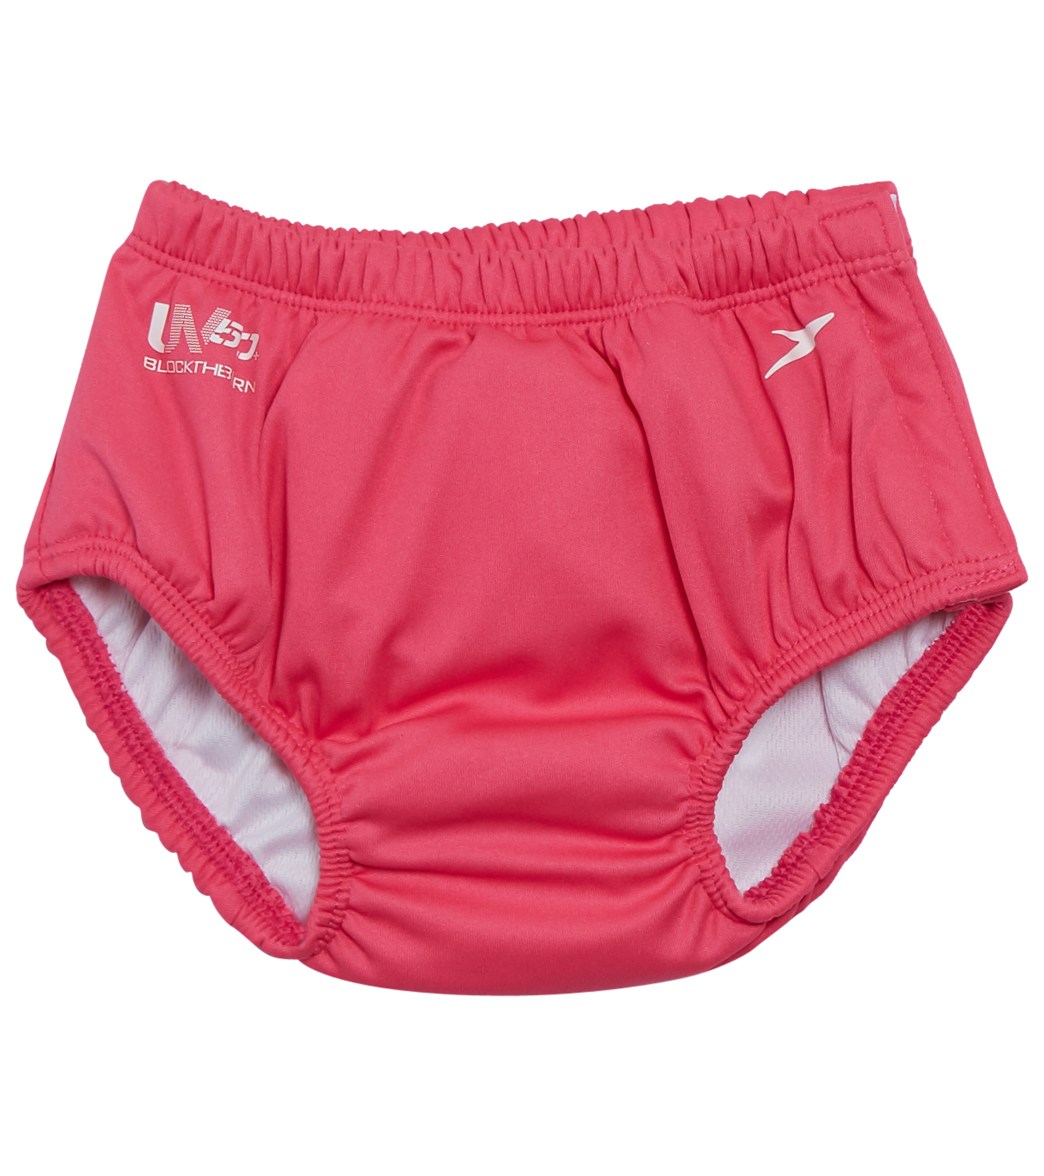 Speedo Keep Swimmin' Premium Swim Diaper - Bright Pink Md 7-12 Months/18-22 Lbs. Size Medium - Swimoutlet.com